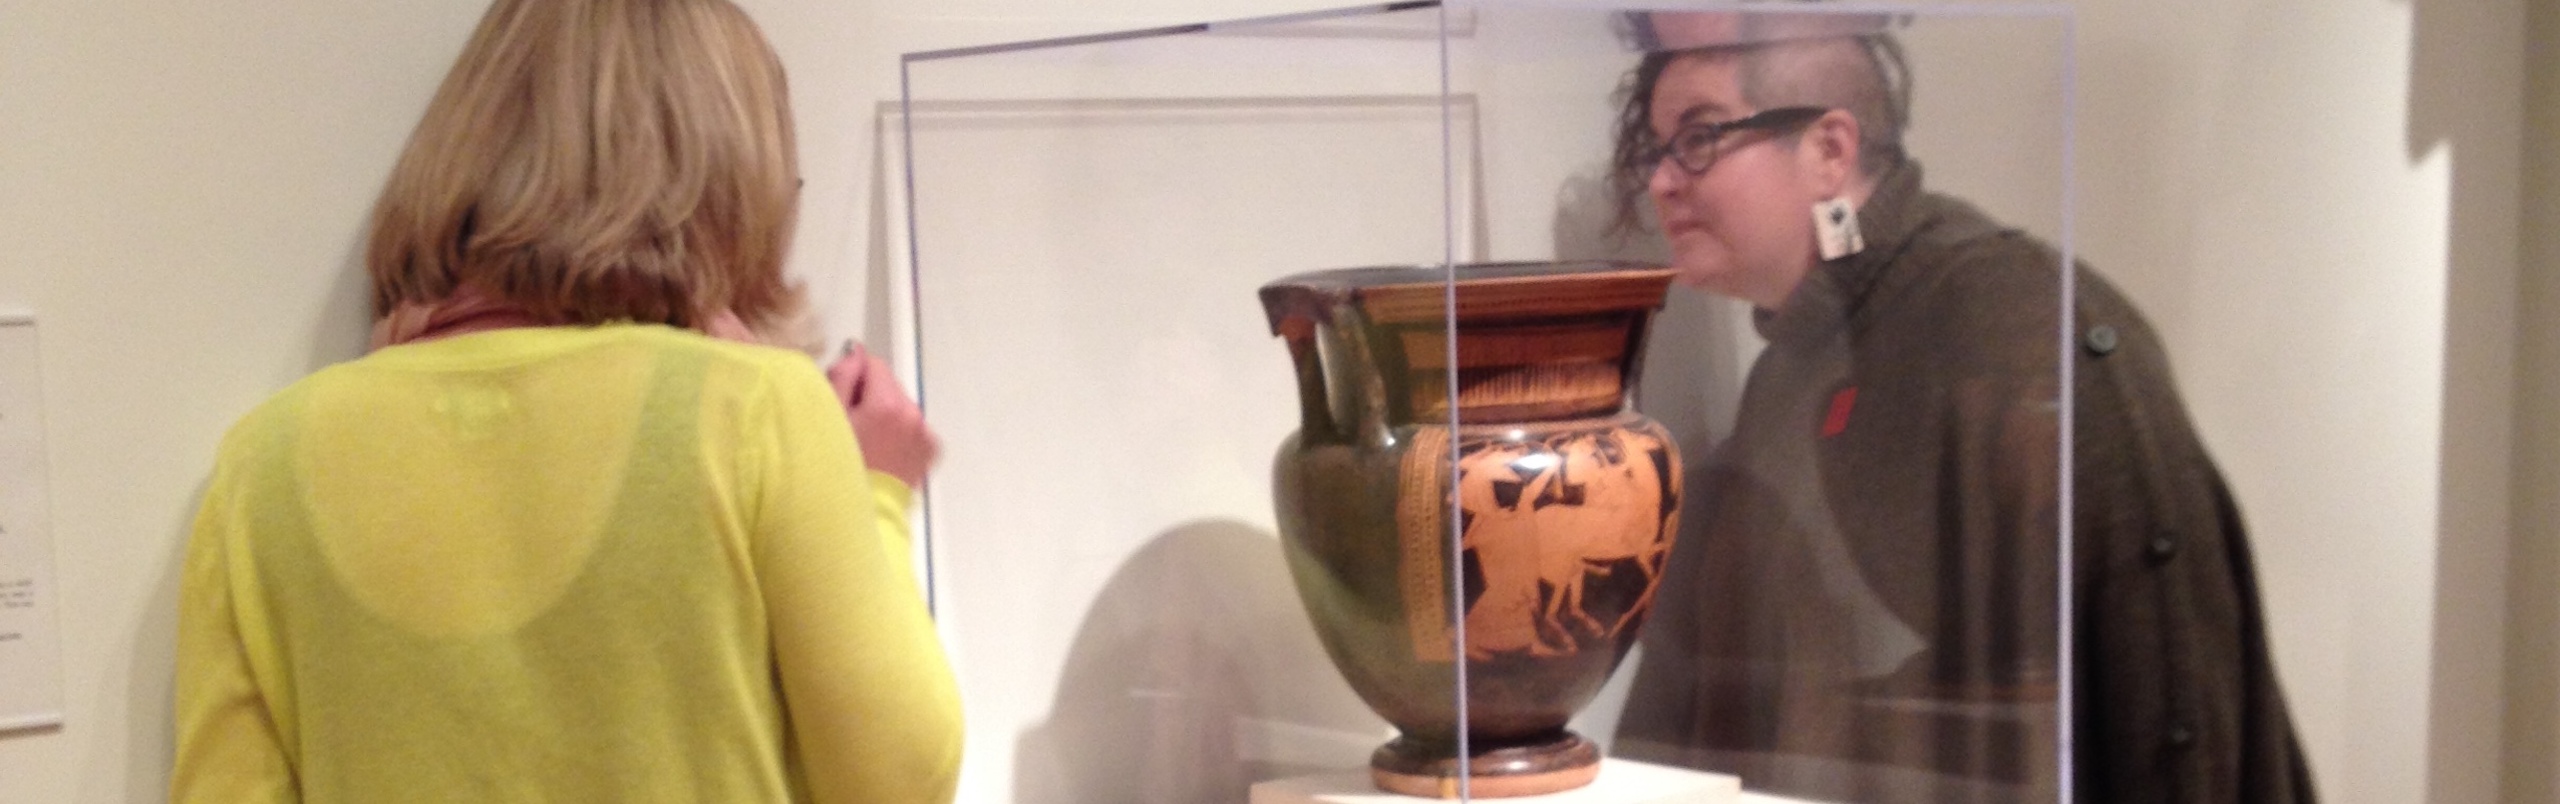 two people looking at a Greek vase